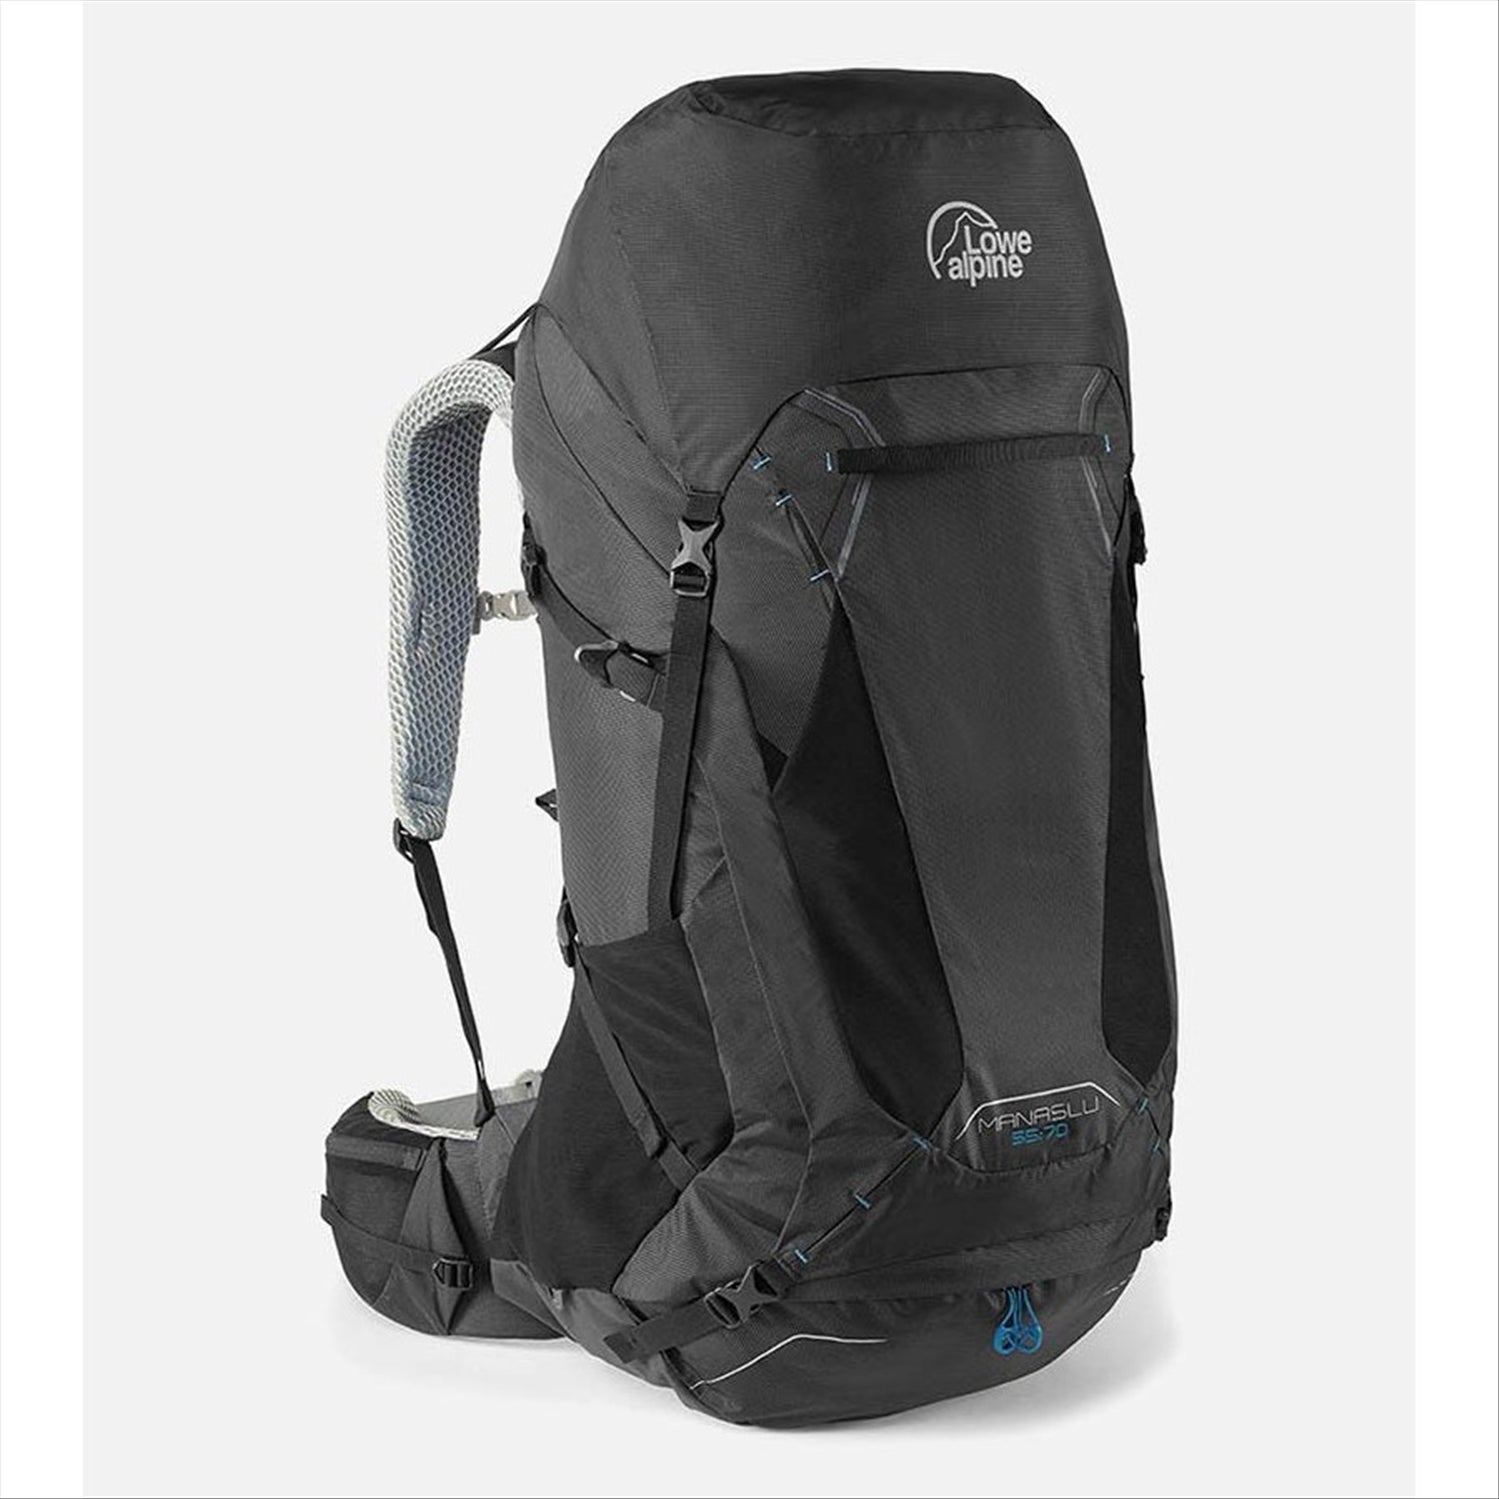 Lowe Alpine Manaslu 55:70 Litre Backpack